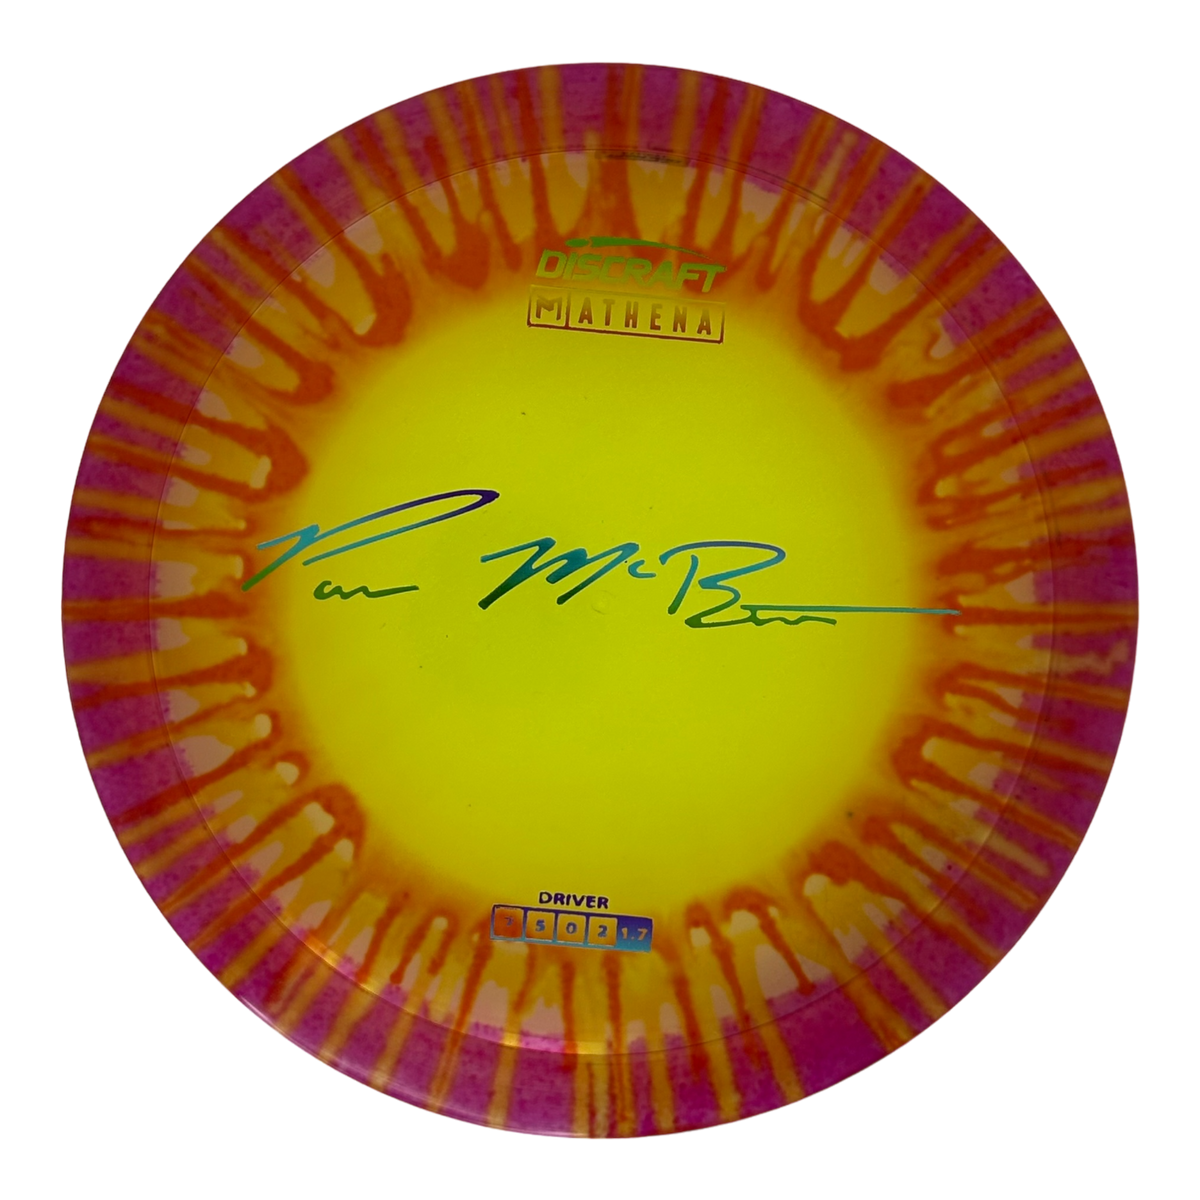 Discraft Paul McBeth Fly Dye Z Athena - Signature Stamp